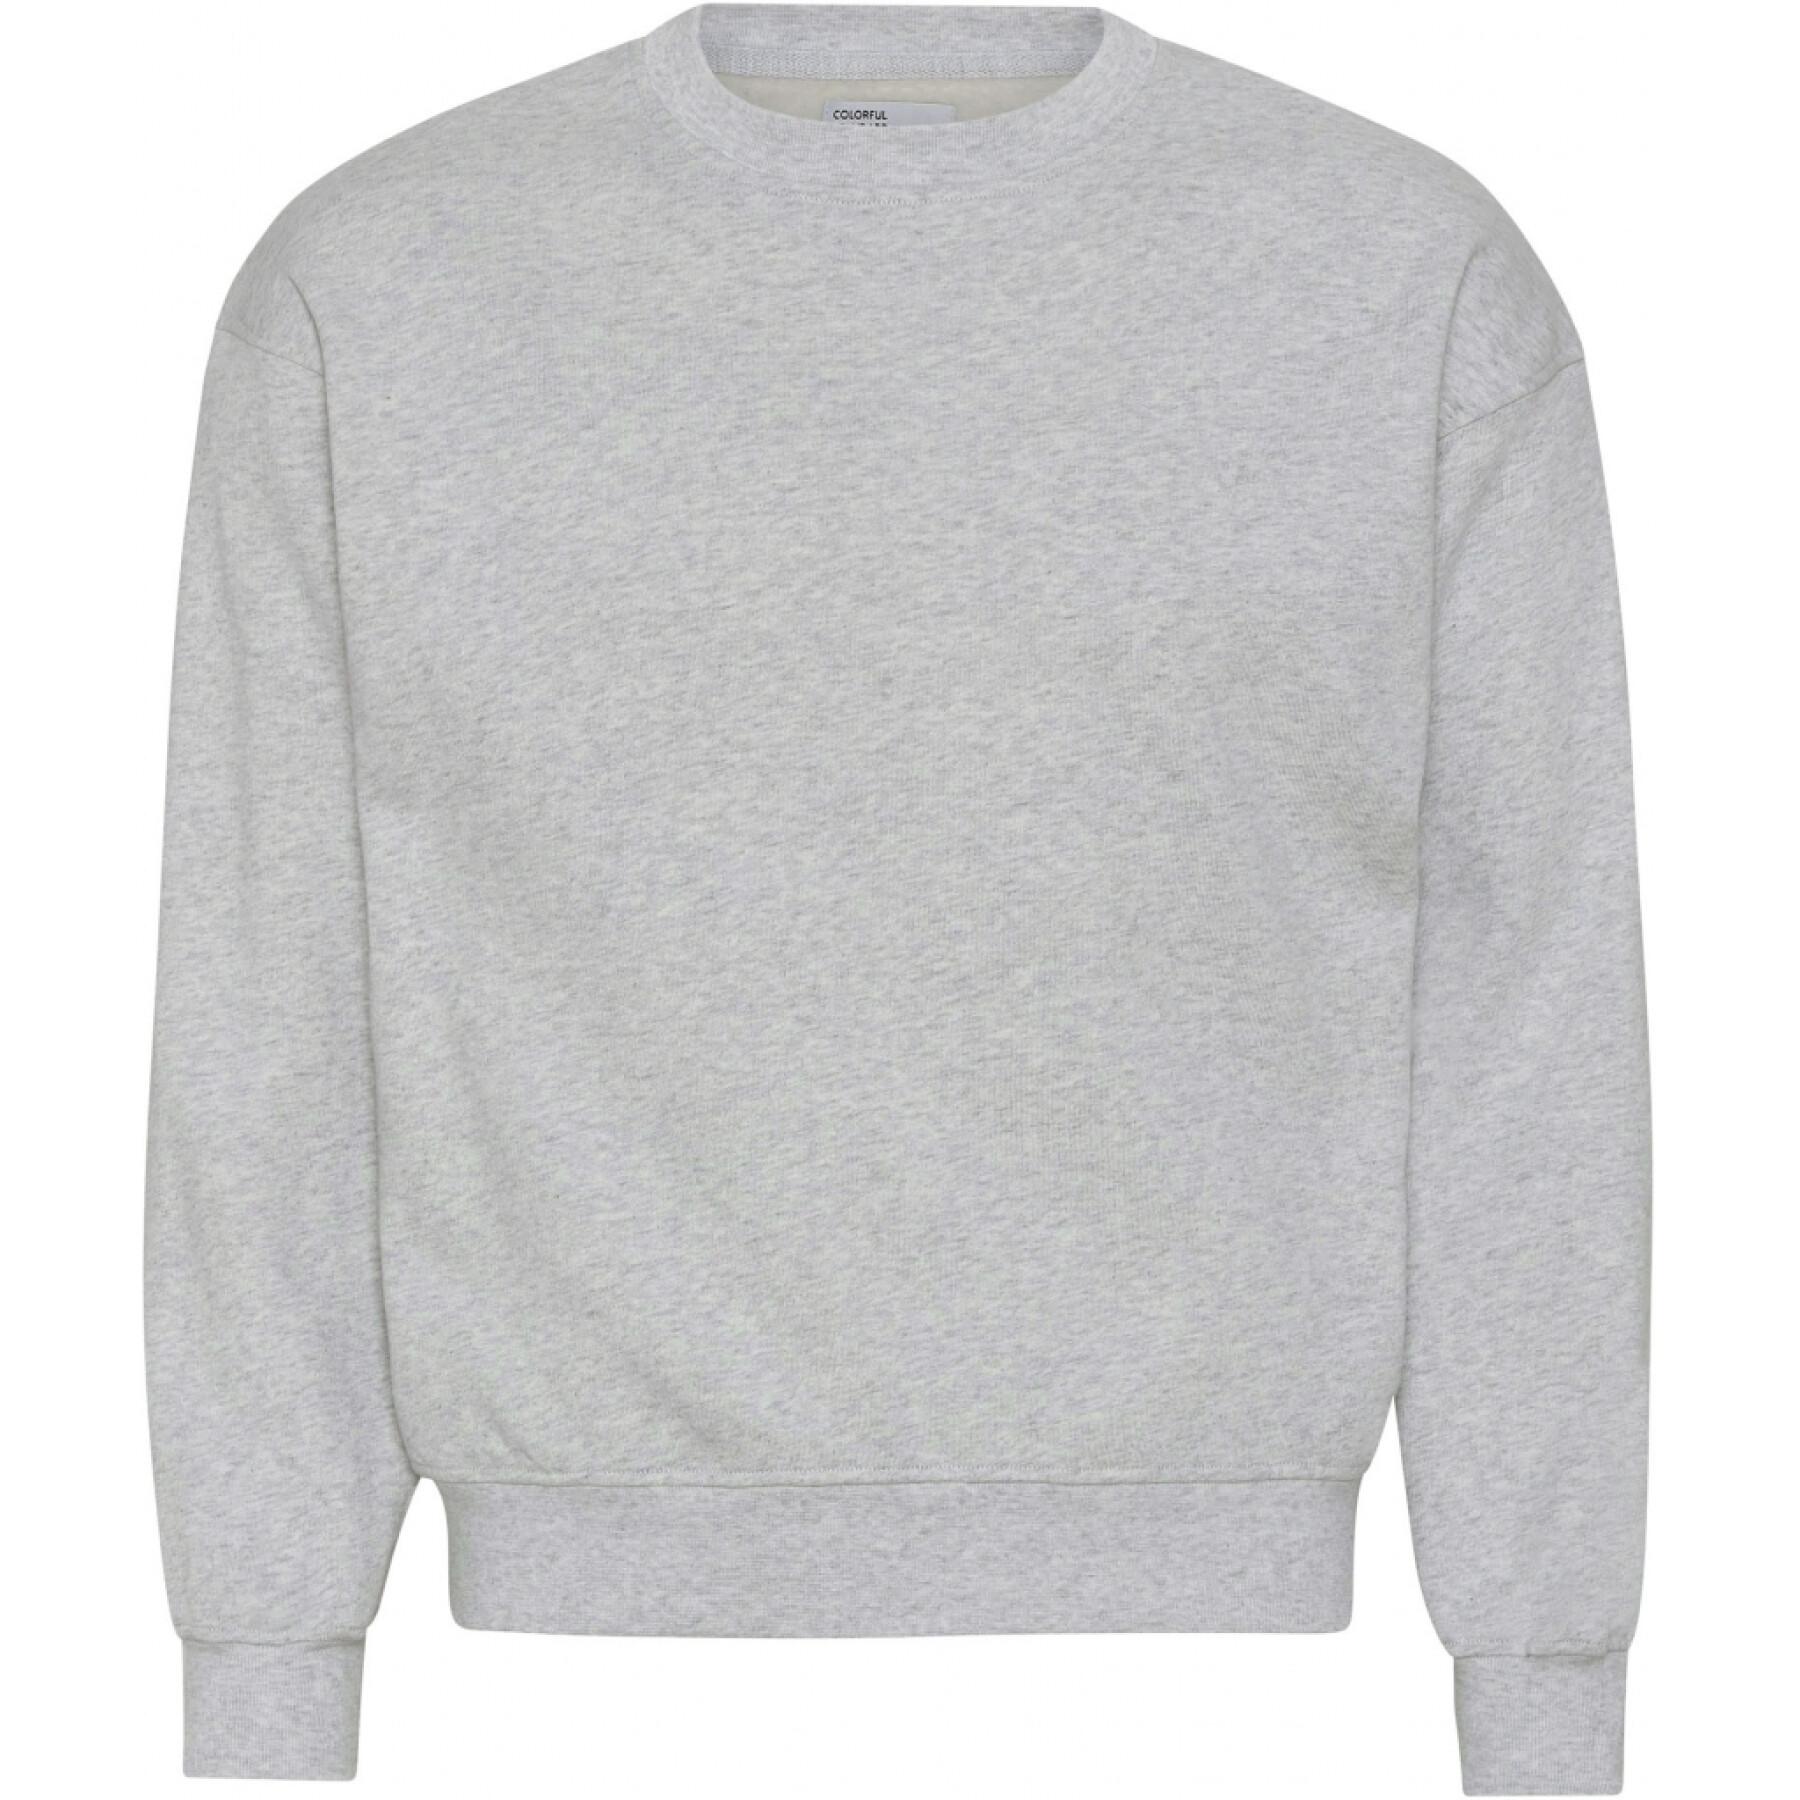 Sweatshirt round neck Colorful Standard Organic oversized heather grey